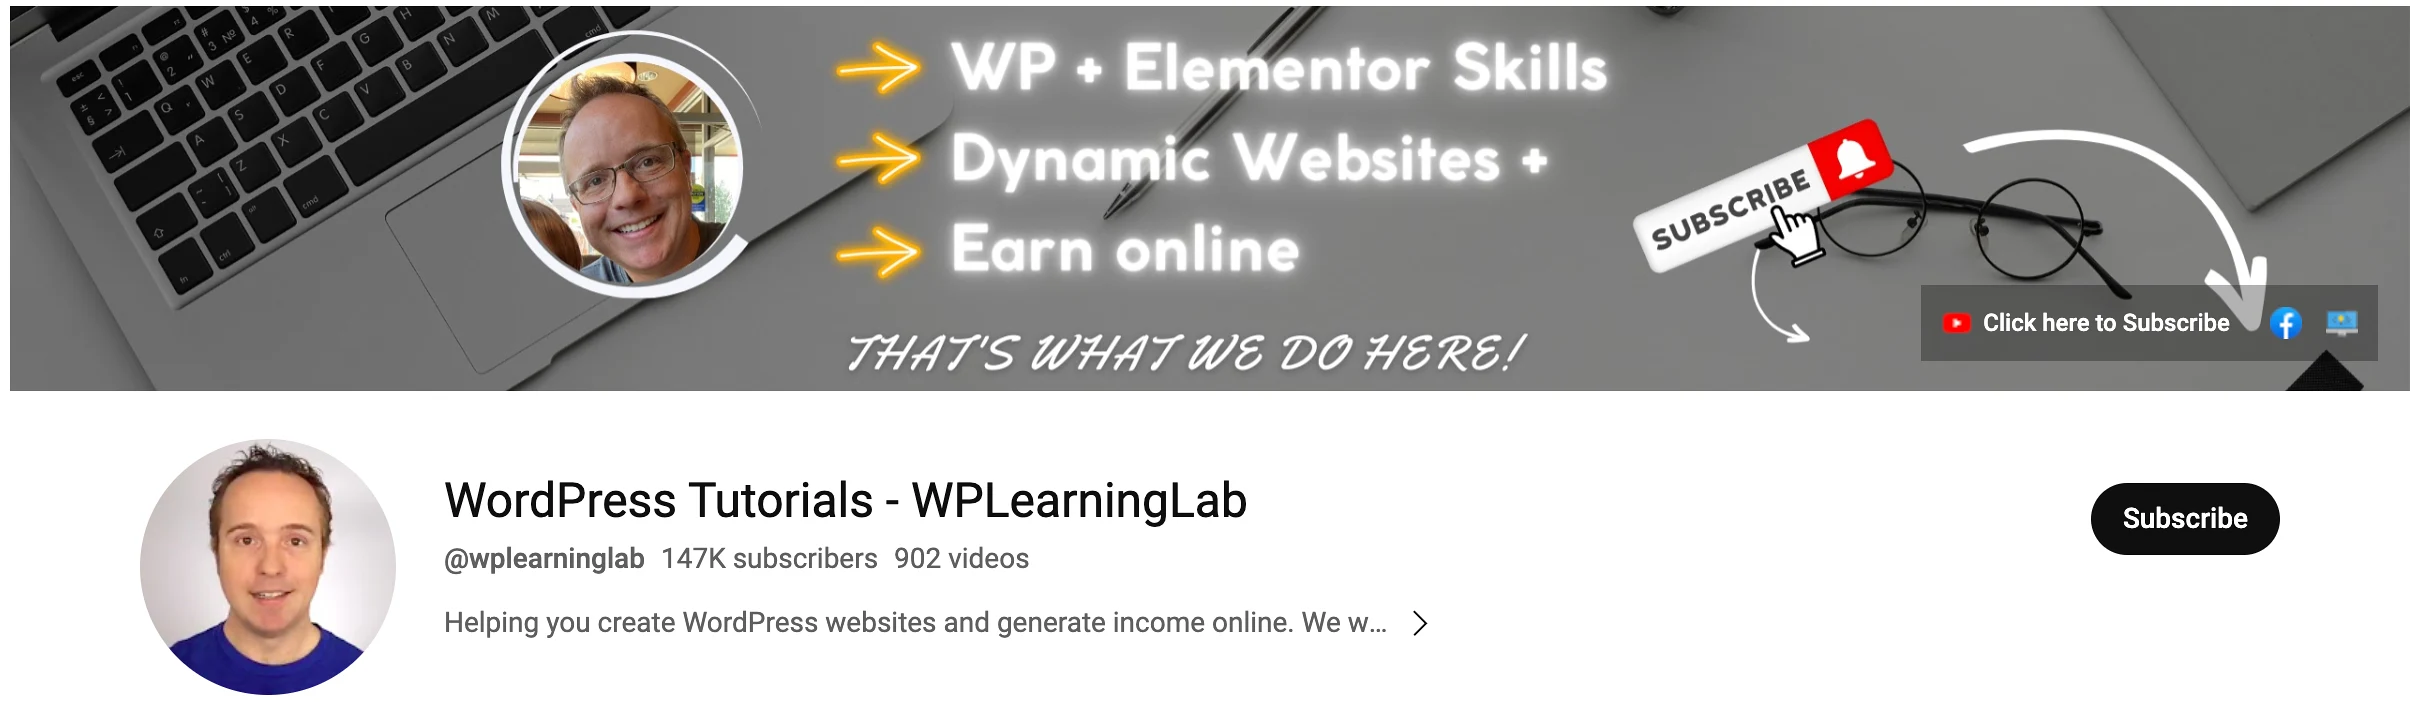 WPLearningLab - Best Youtube Channels for Learning WordPress